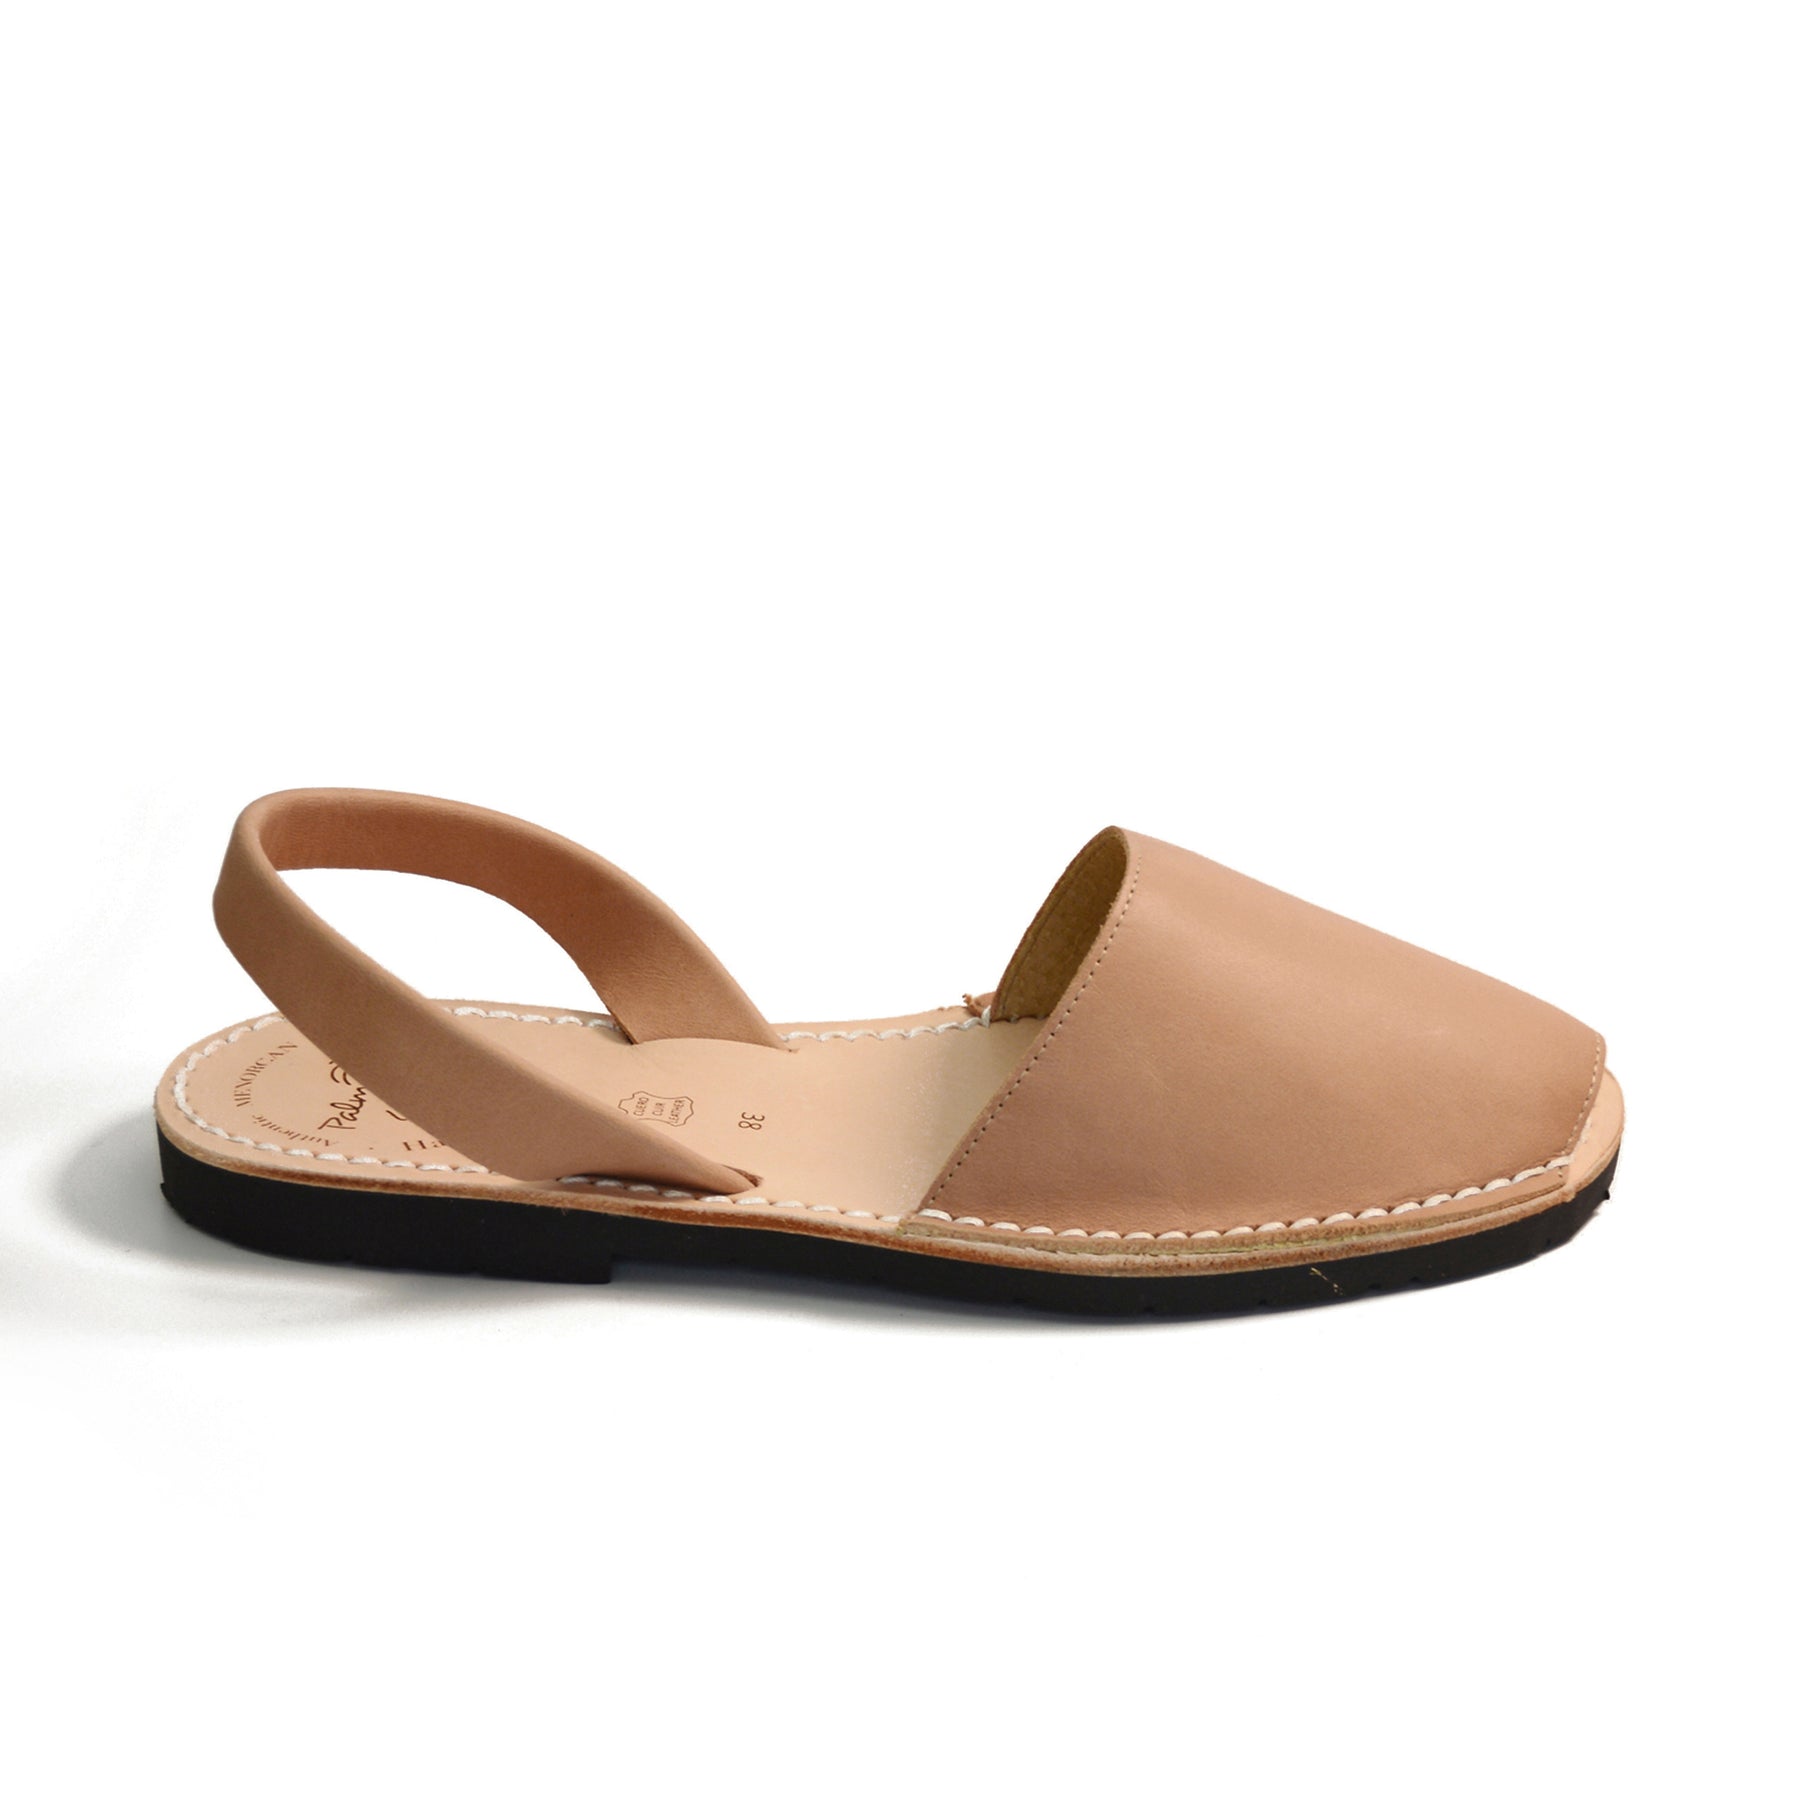 Tan Leather Menorcan Avarcas Sandals 